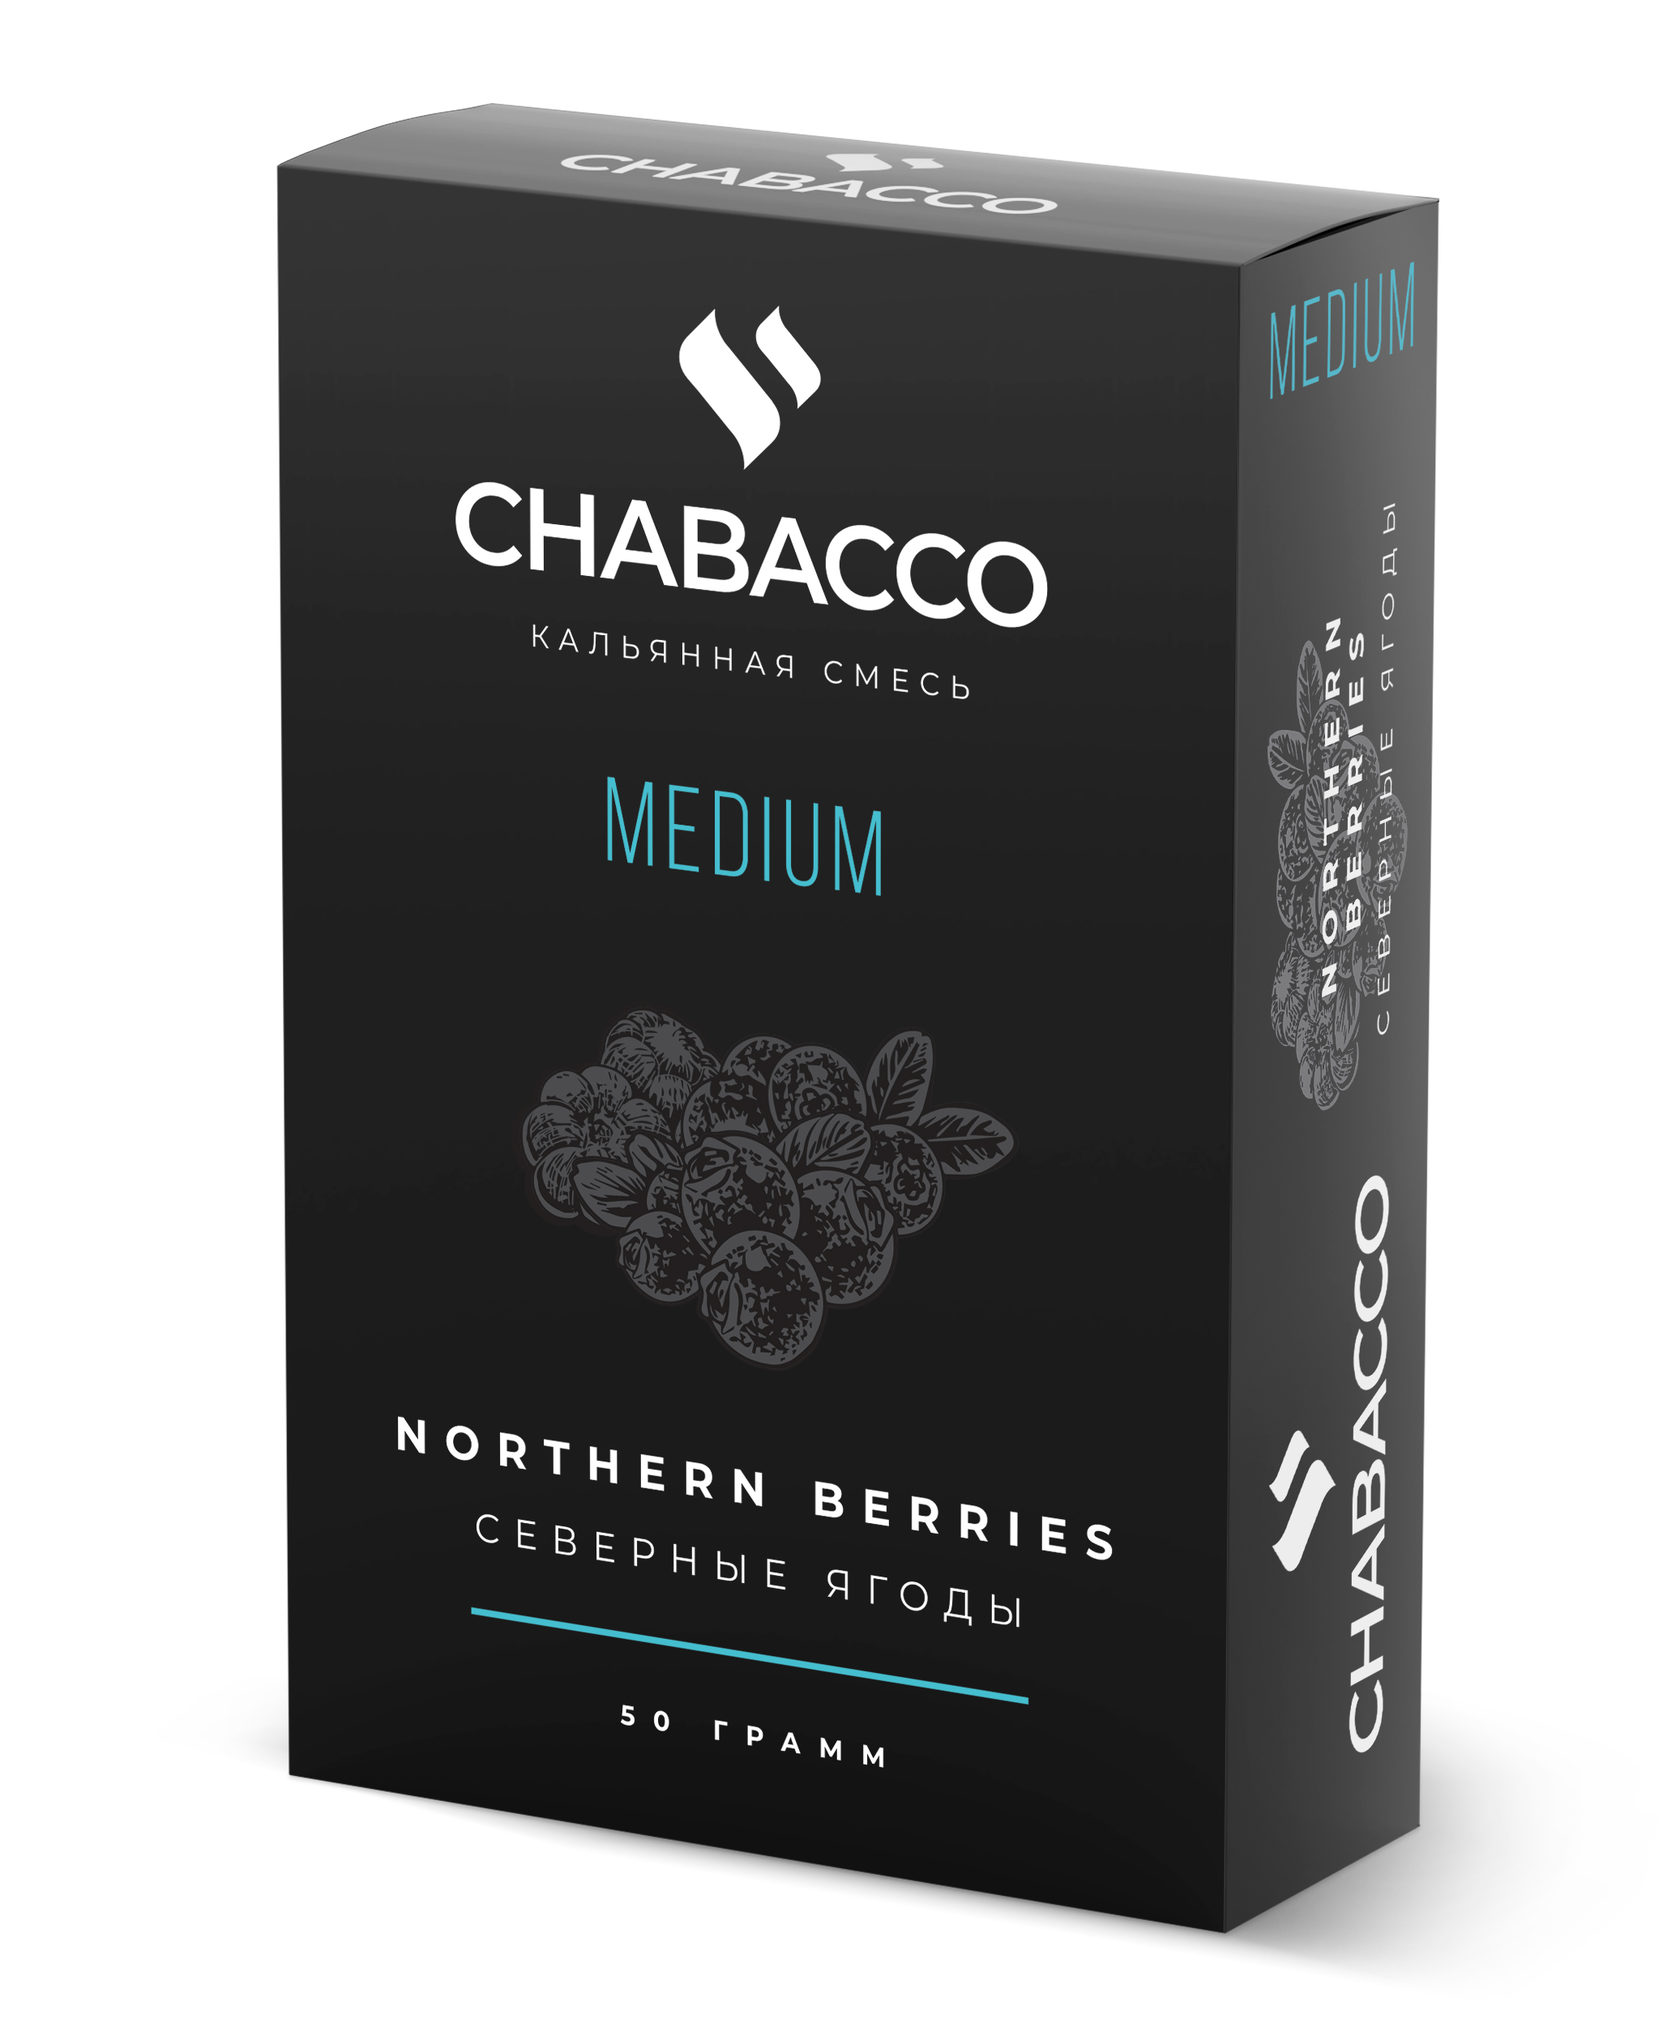 Chaba 50 гр. / Northern berries